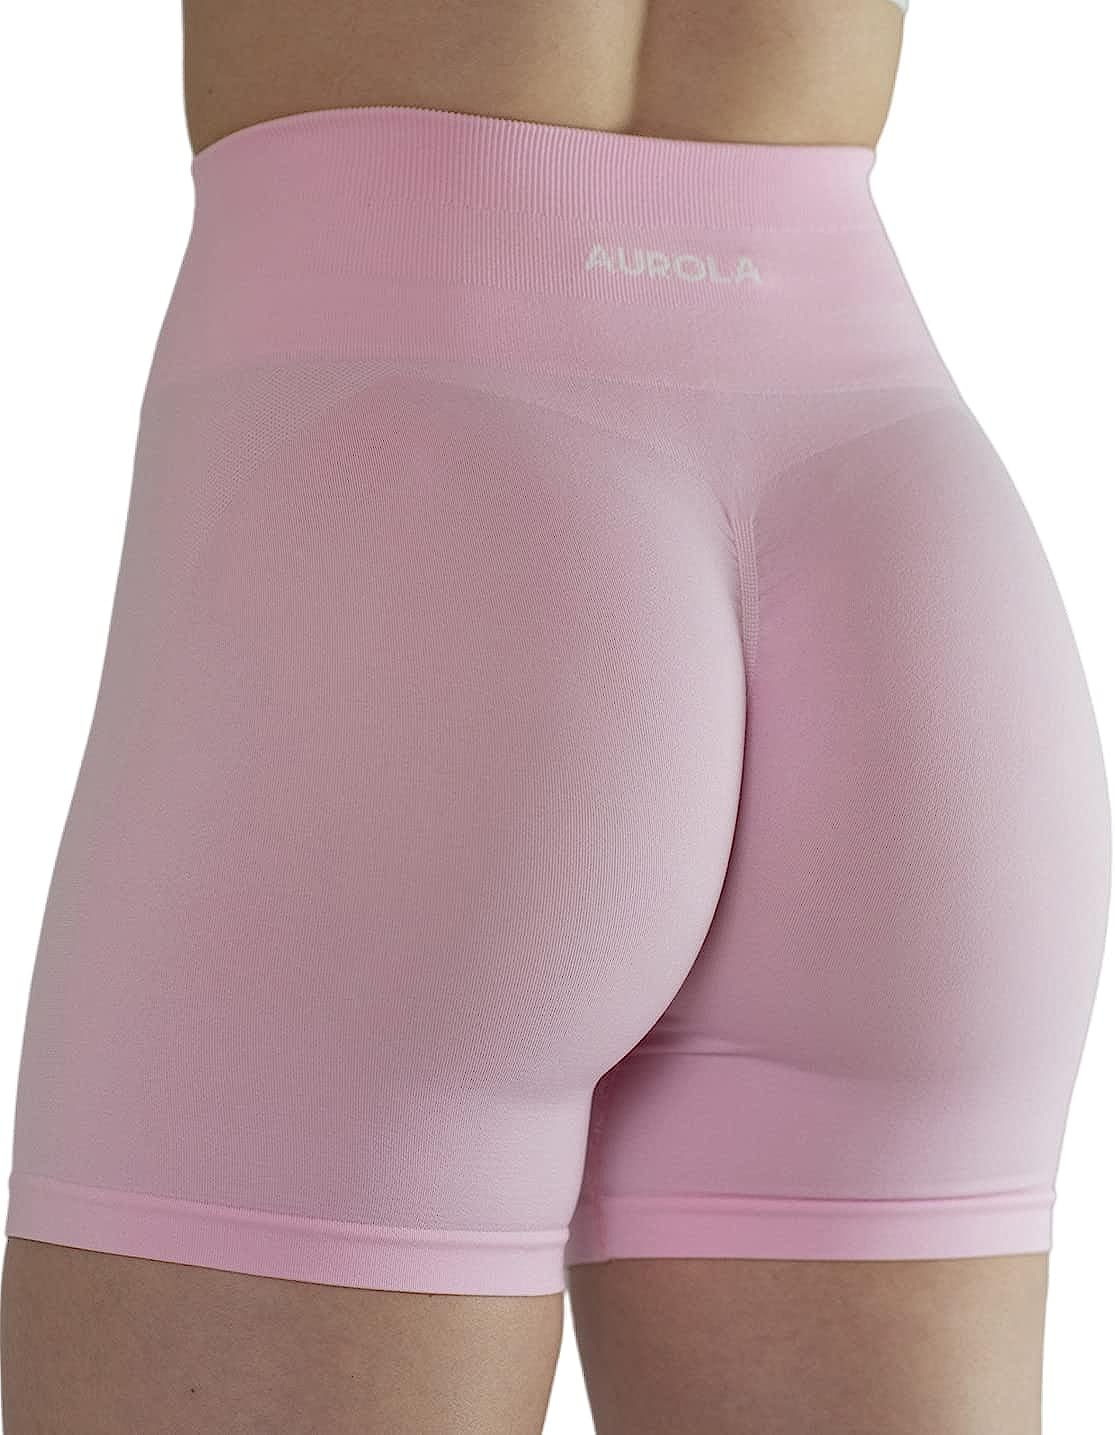  AUROLA Workout Leggings For Women Seamless Scrunch Yoga Pants  Tummy Control Gym Fitness Sport Active Leggings 25